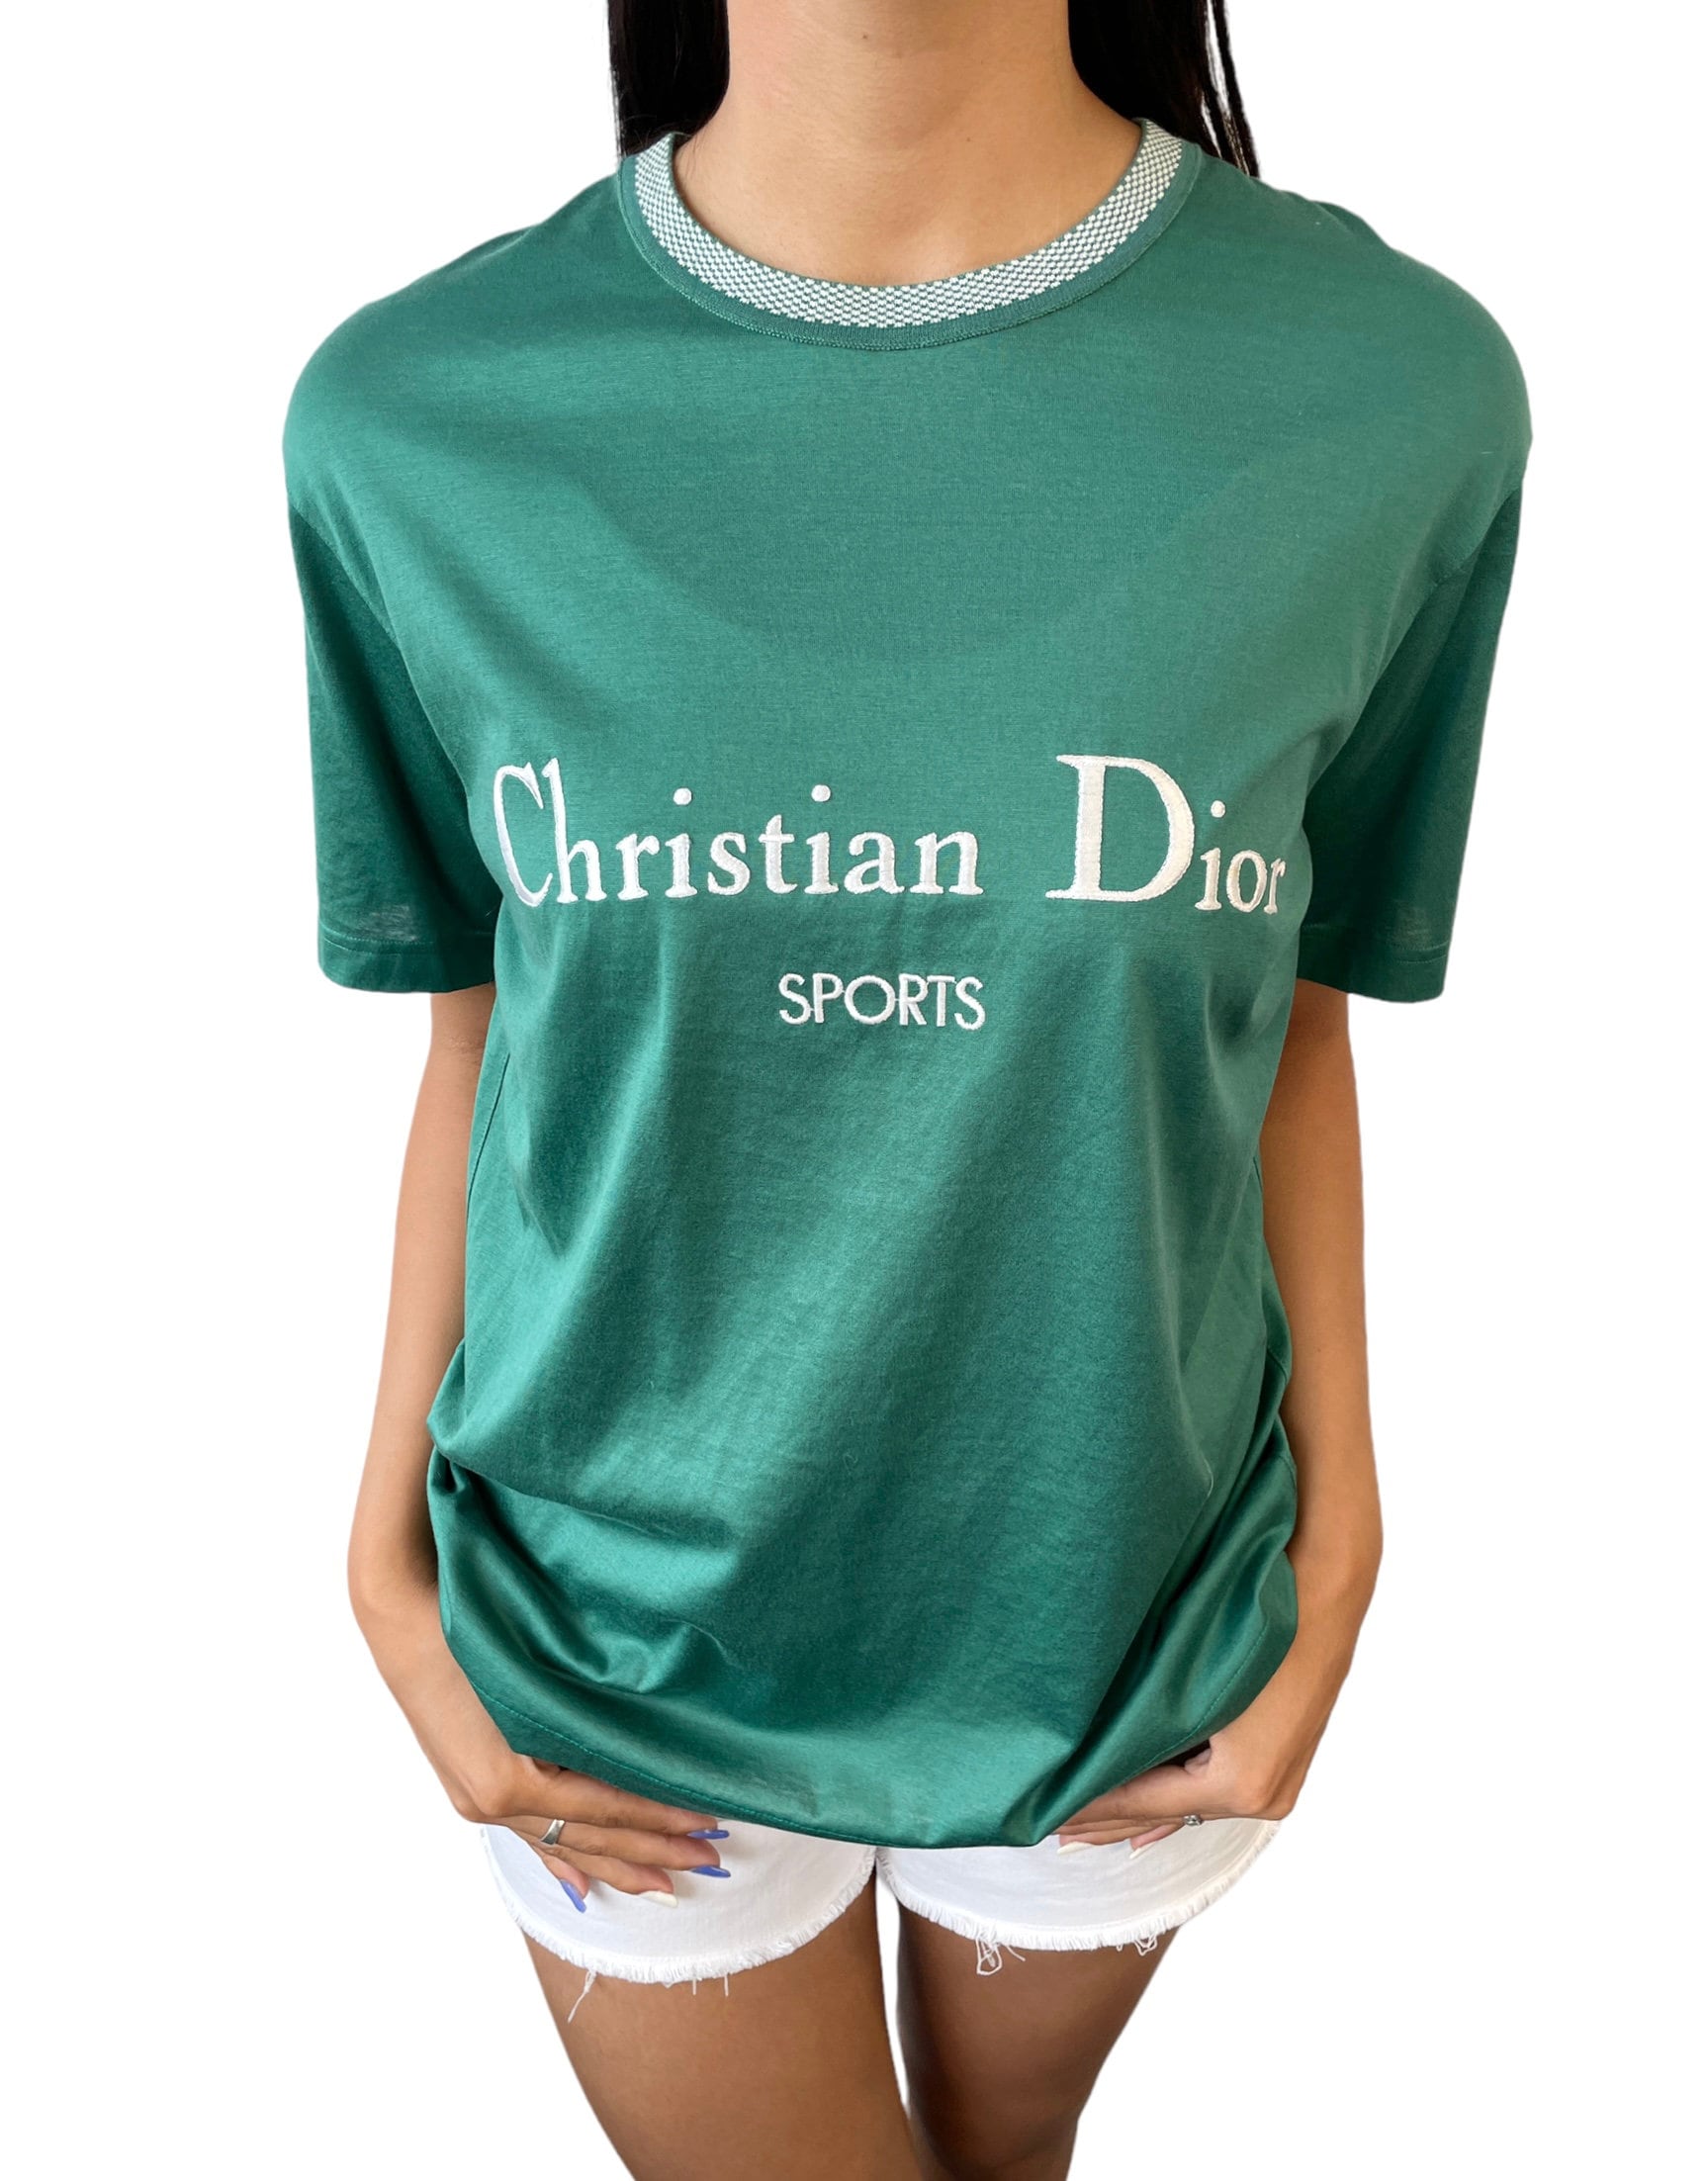 Christian Dior Vintage 2003 T-Shirt - Green Tops, Clothing